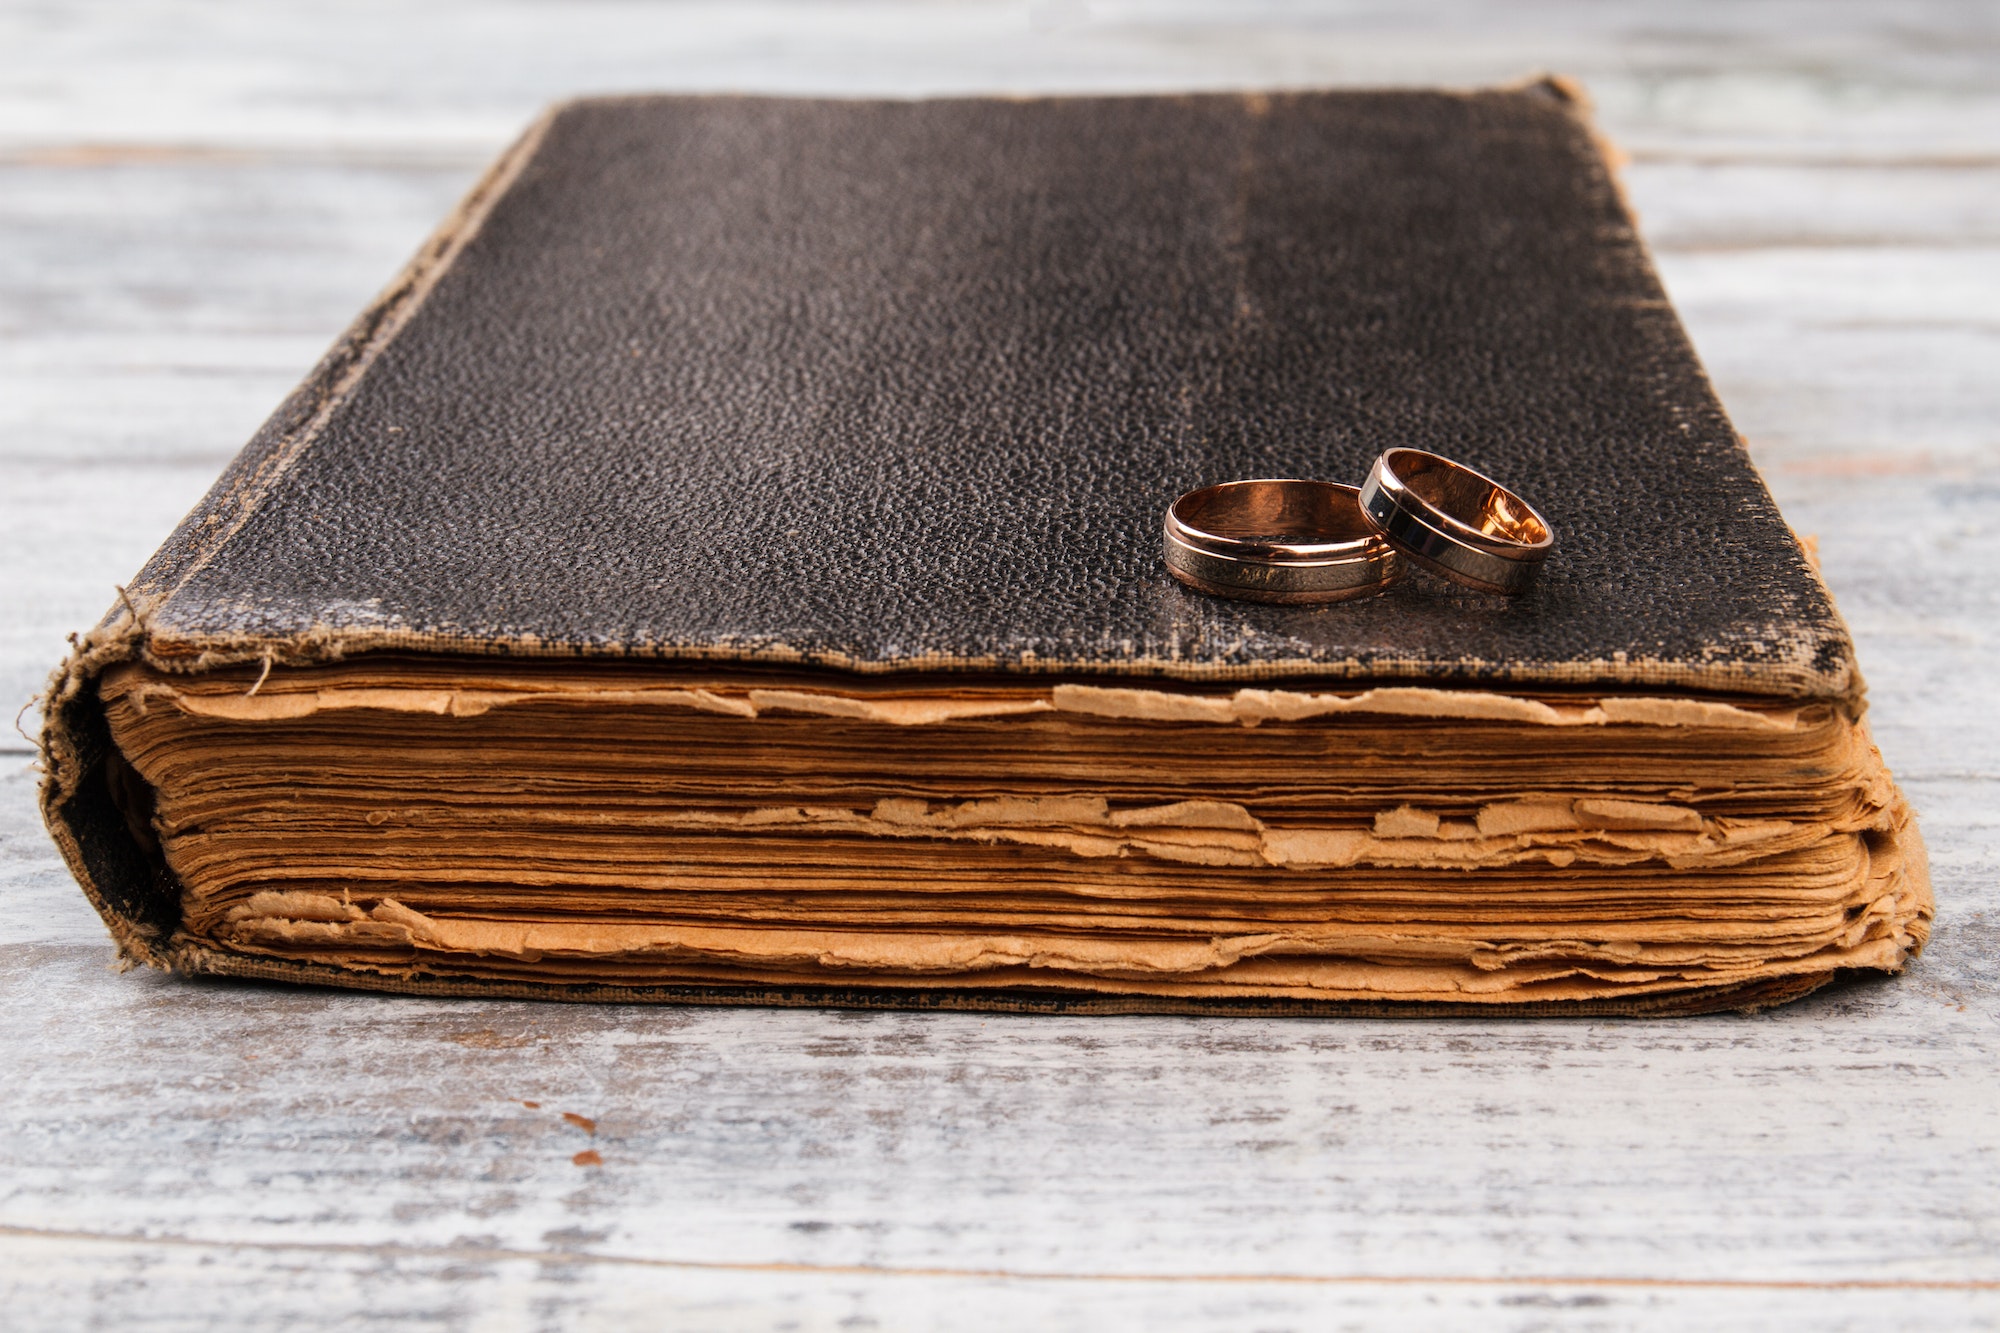 How Should Communities Handle Marriage?